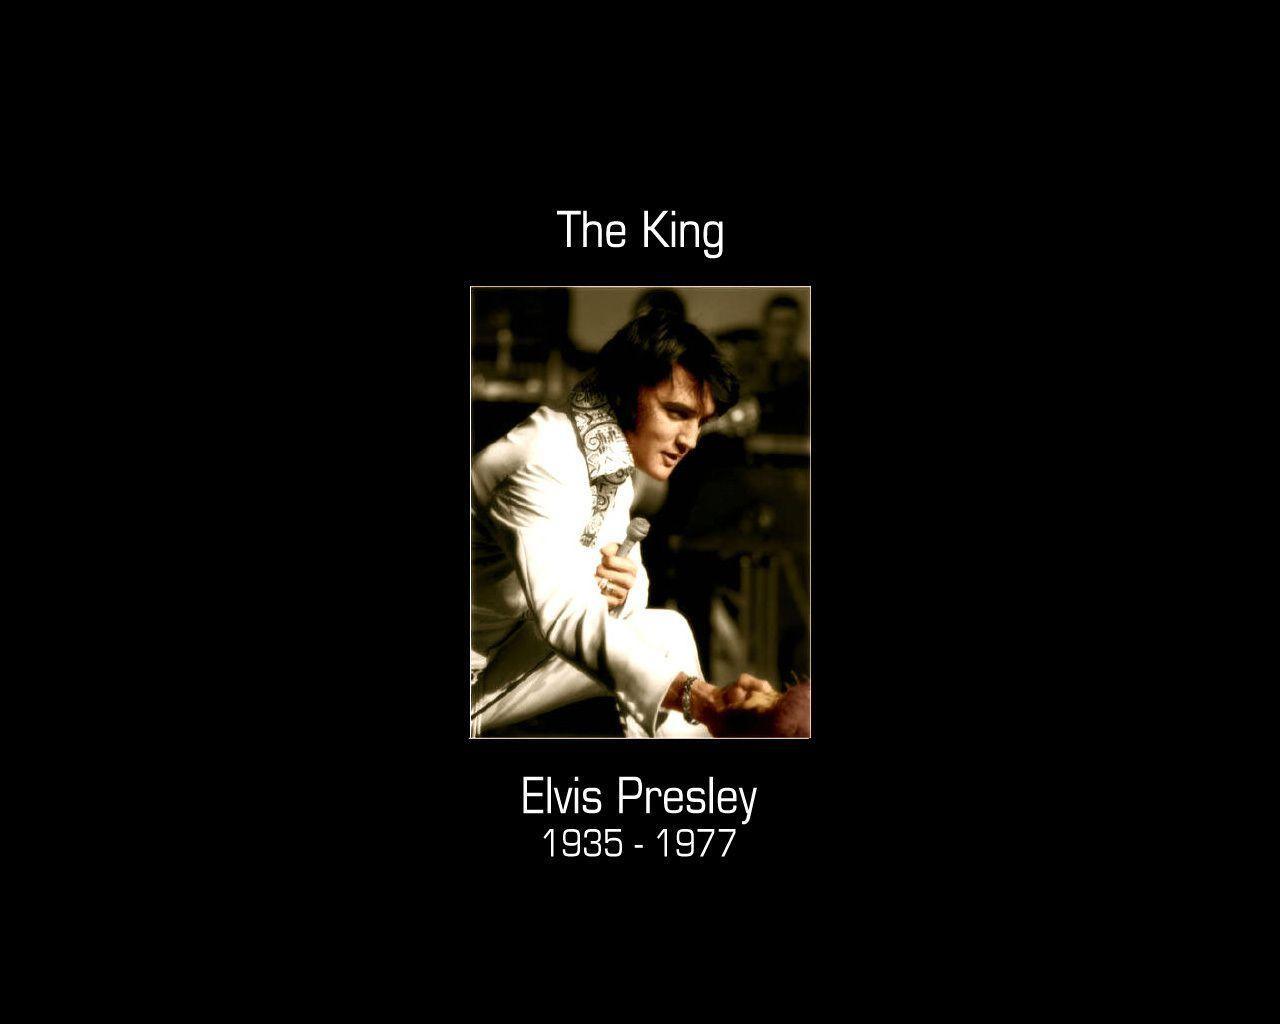 The King Presley Wallpaper